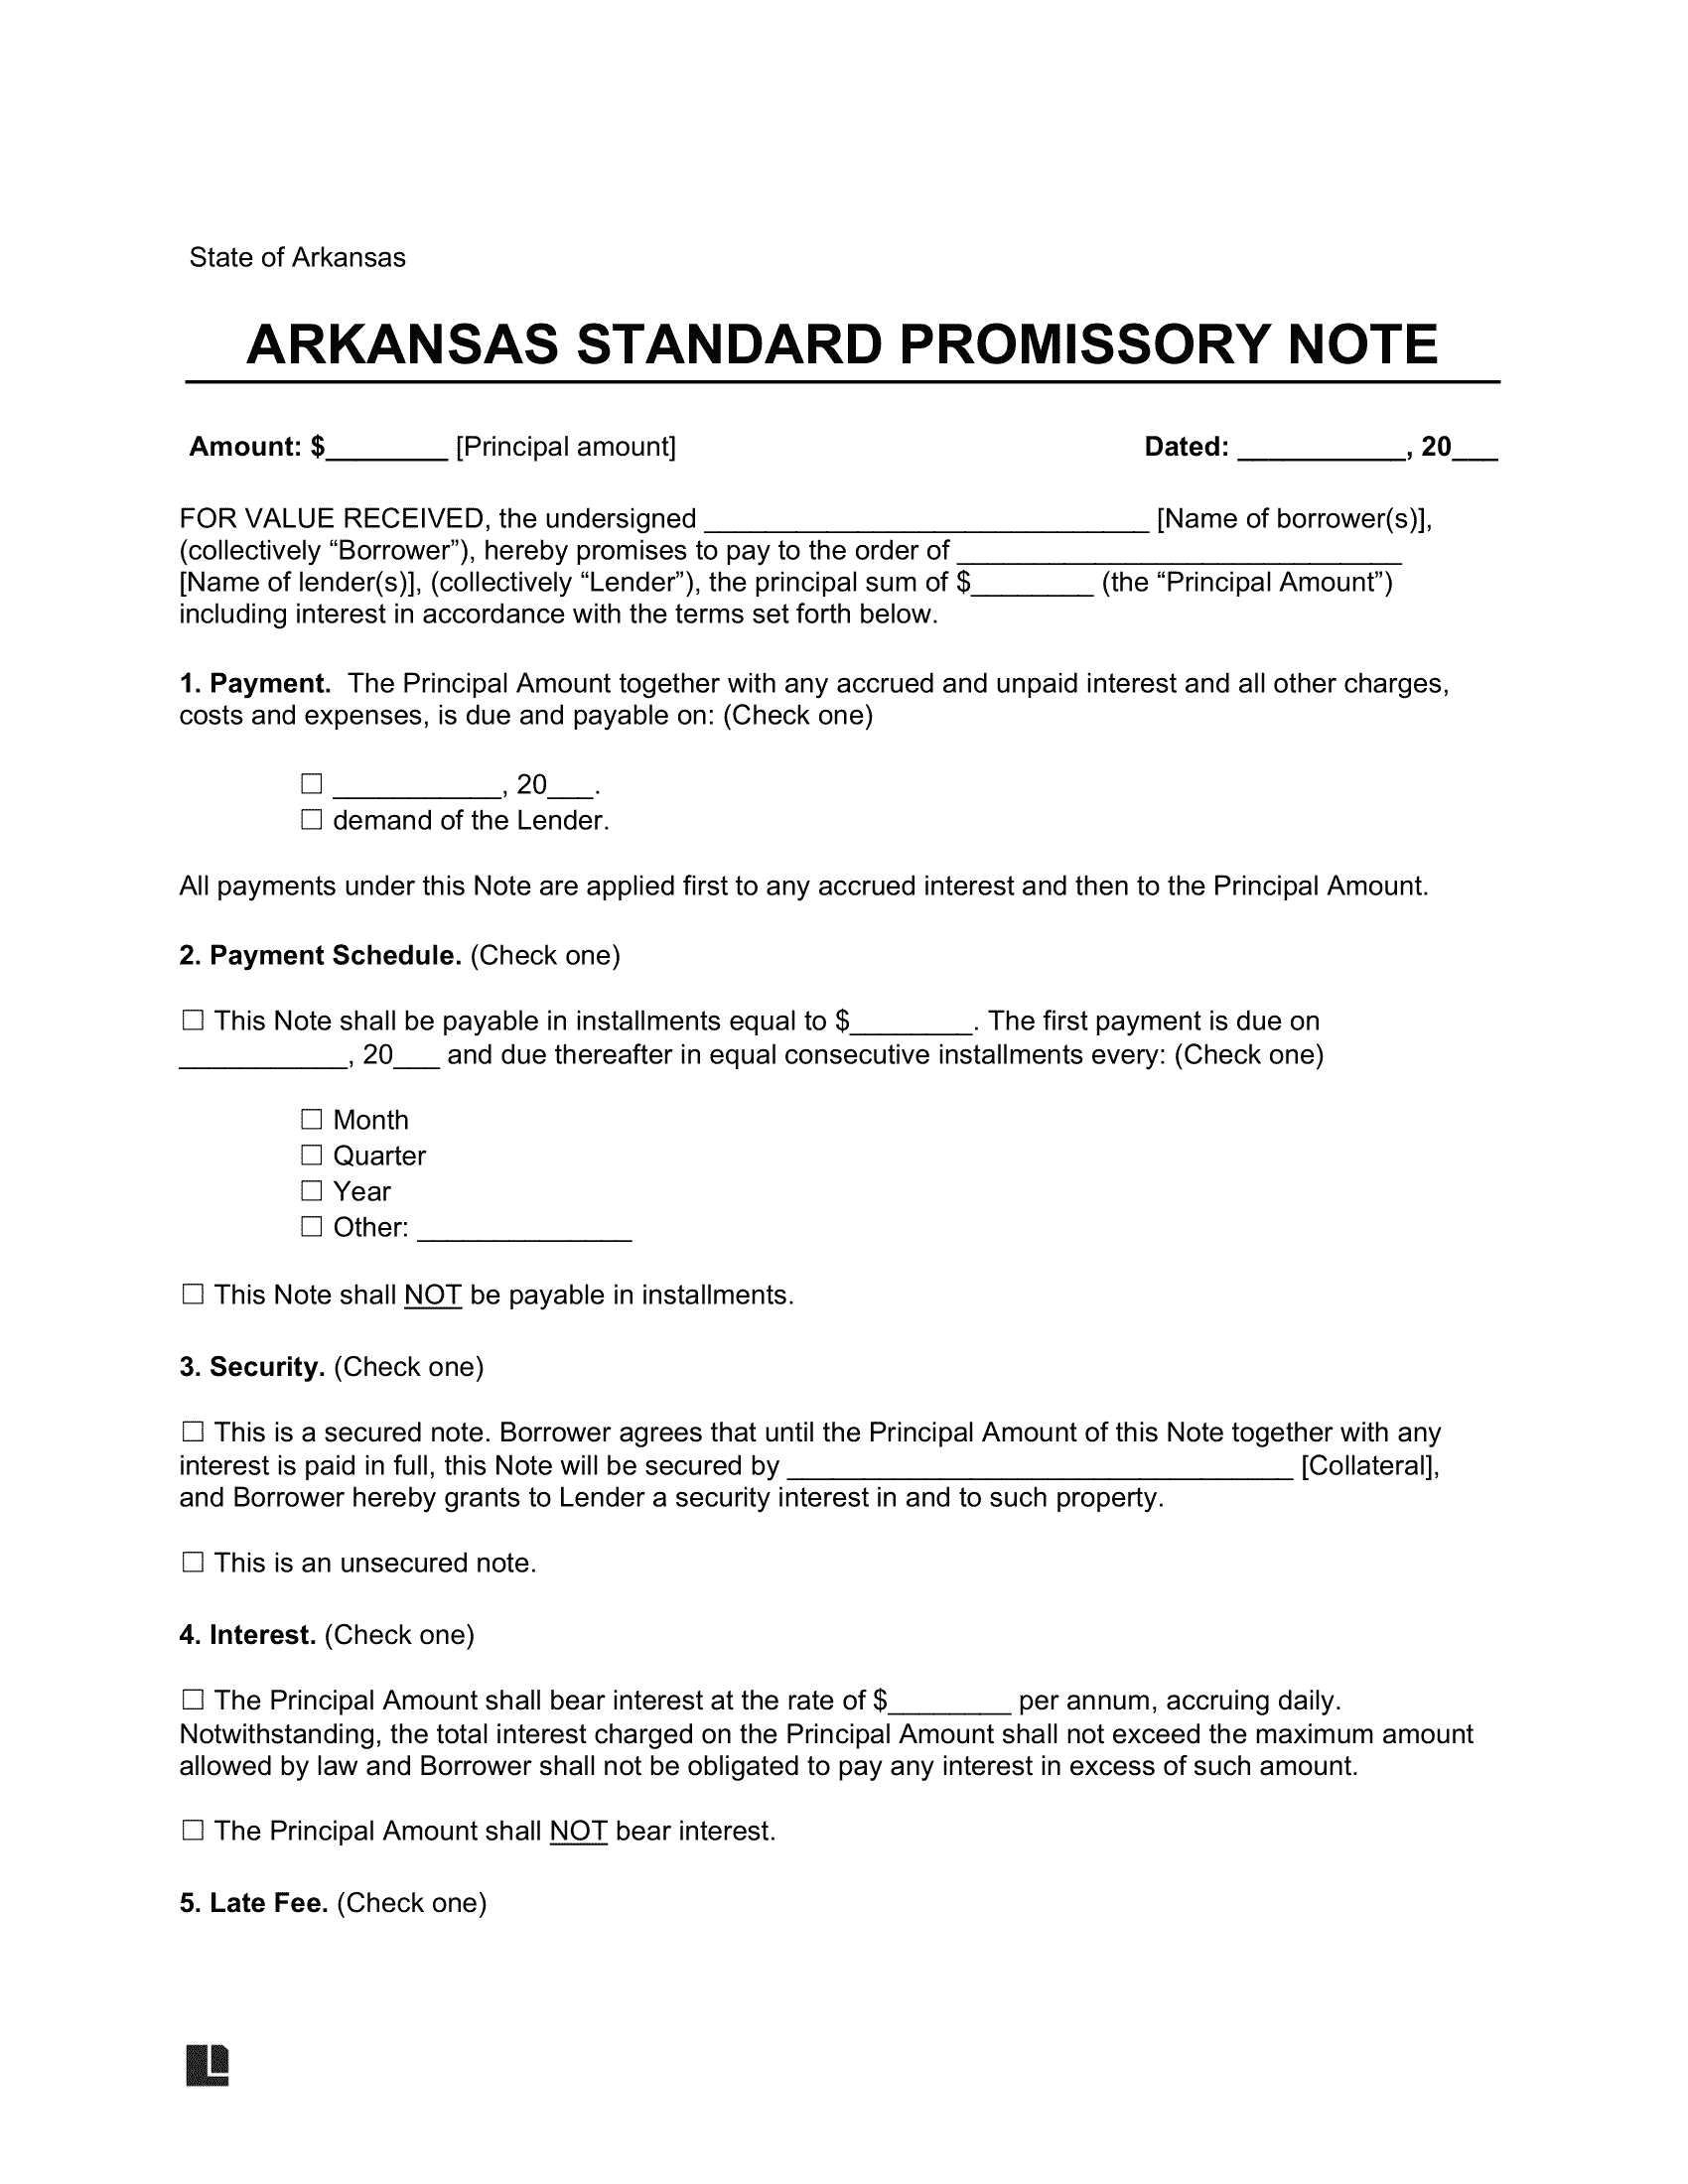 Arkansas Standard Promissory Note Template